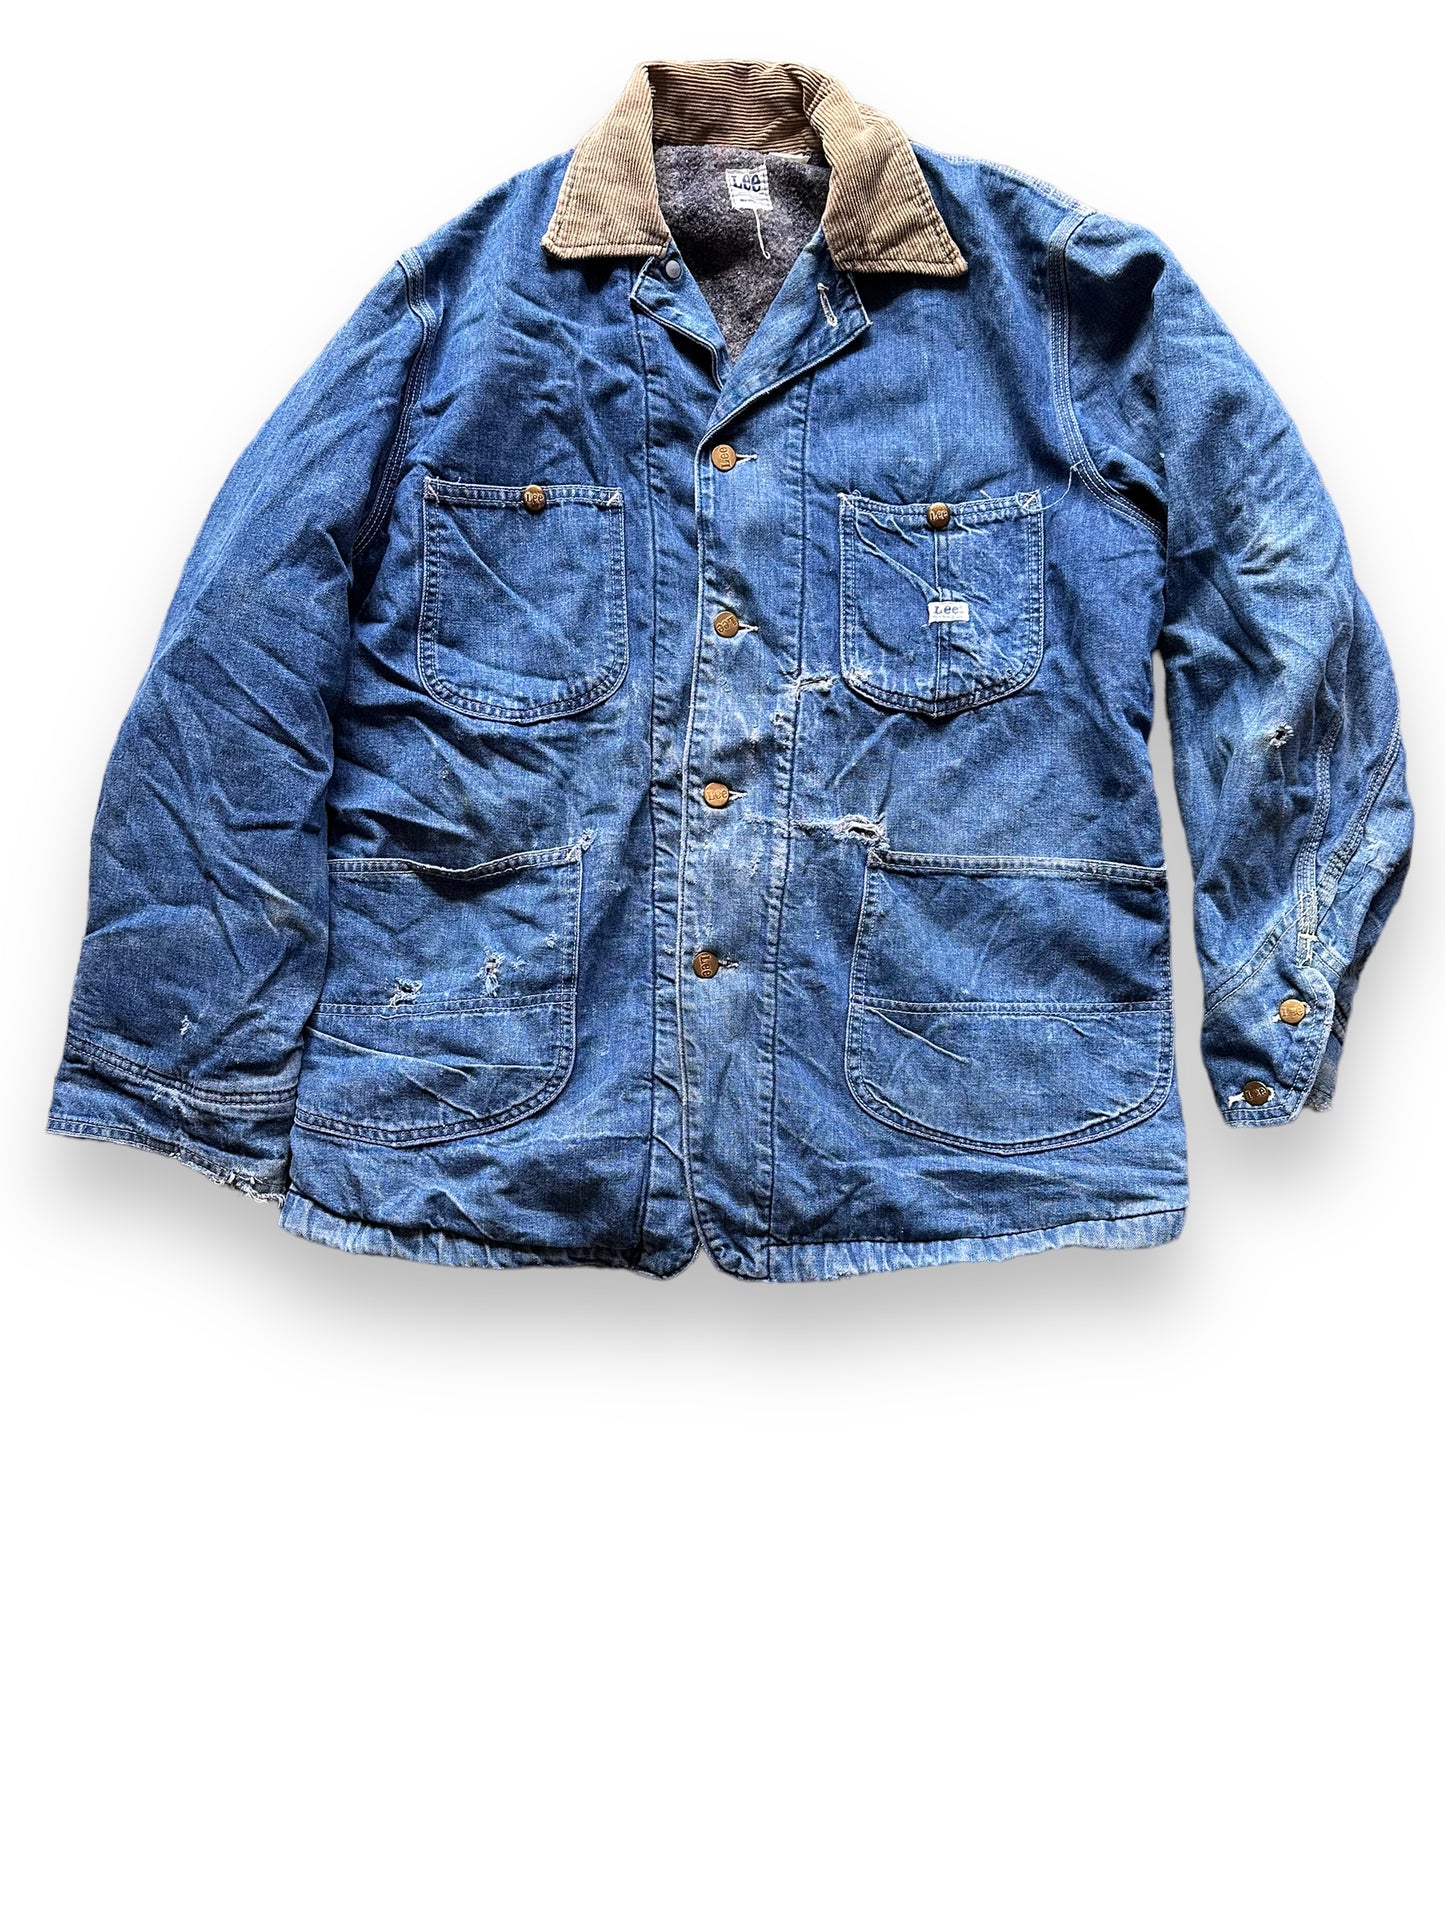 Front View of Vintage Blanket Lined Lee Denim Chore Jacket SZ XL| Vintage Denim Workwear | Seattle Vintage Workwear